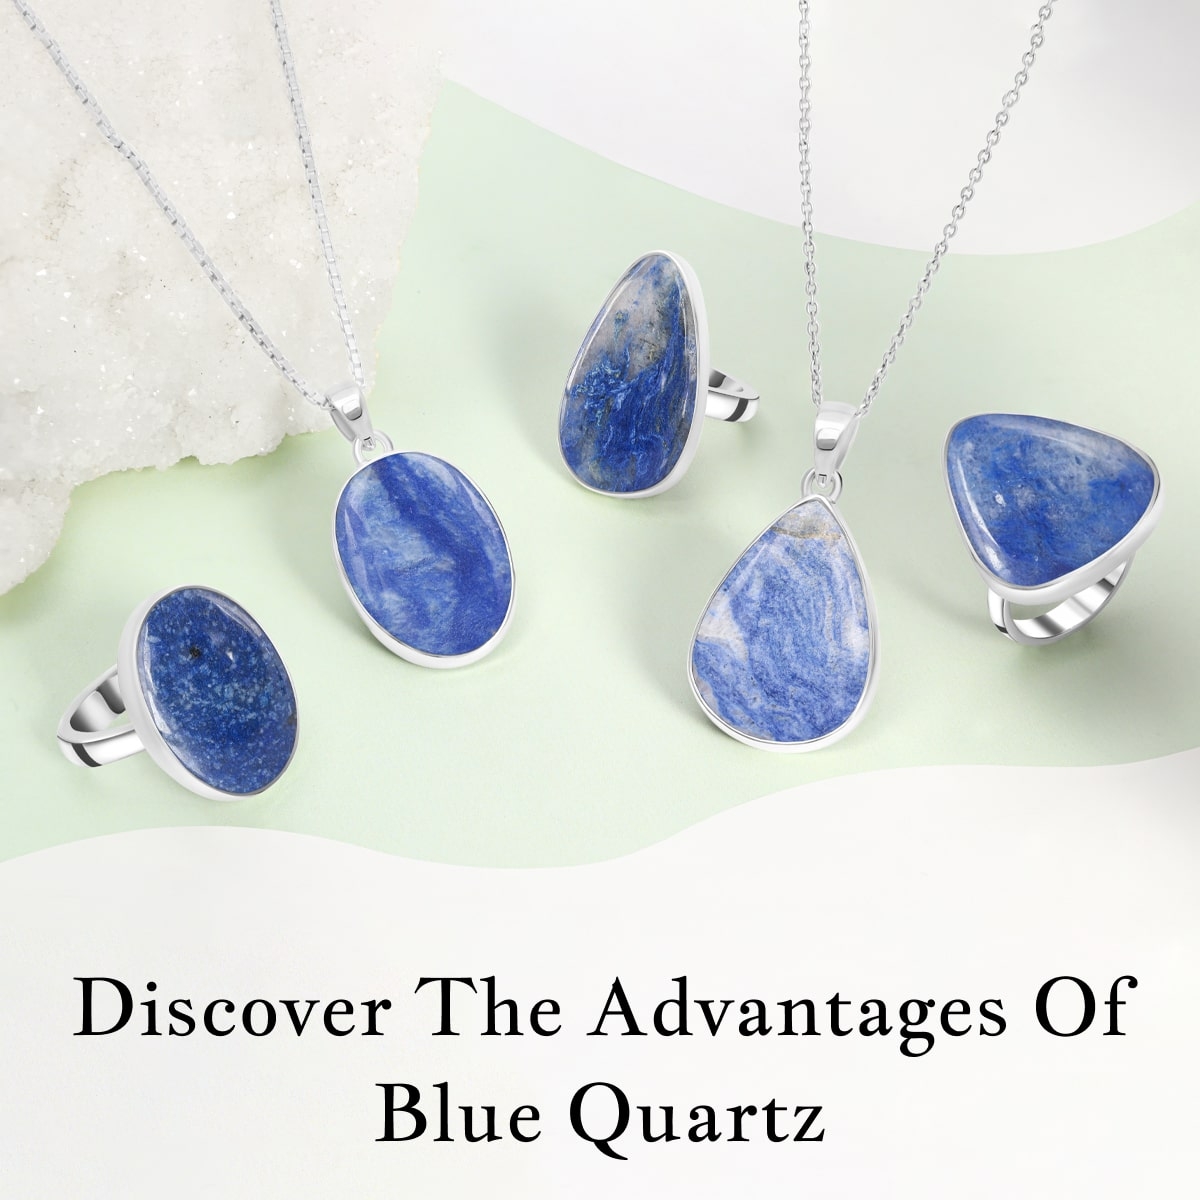 Benefits of Blue Quartz Stone